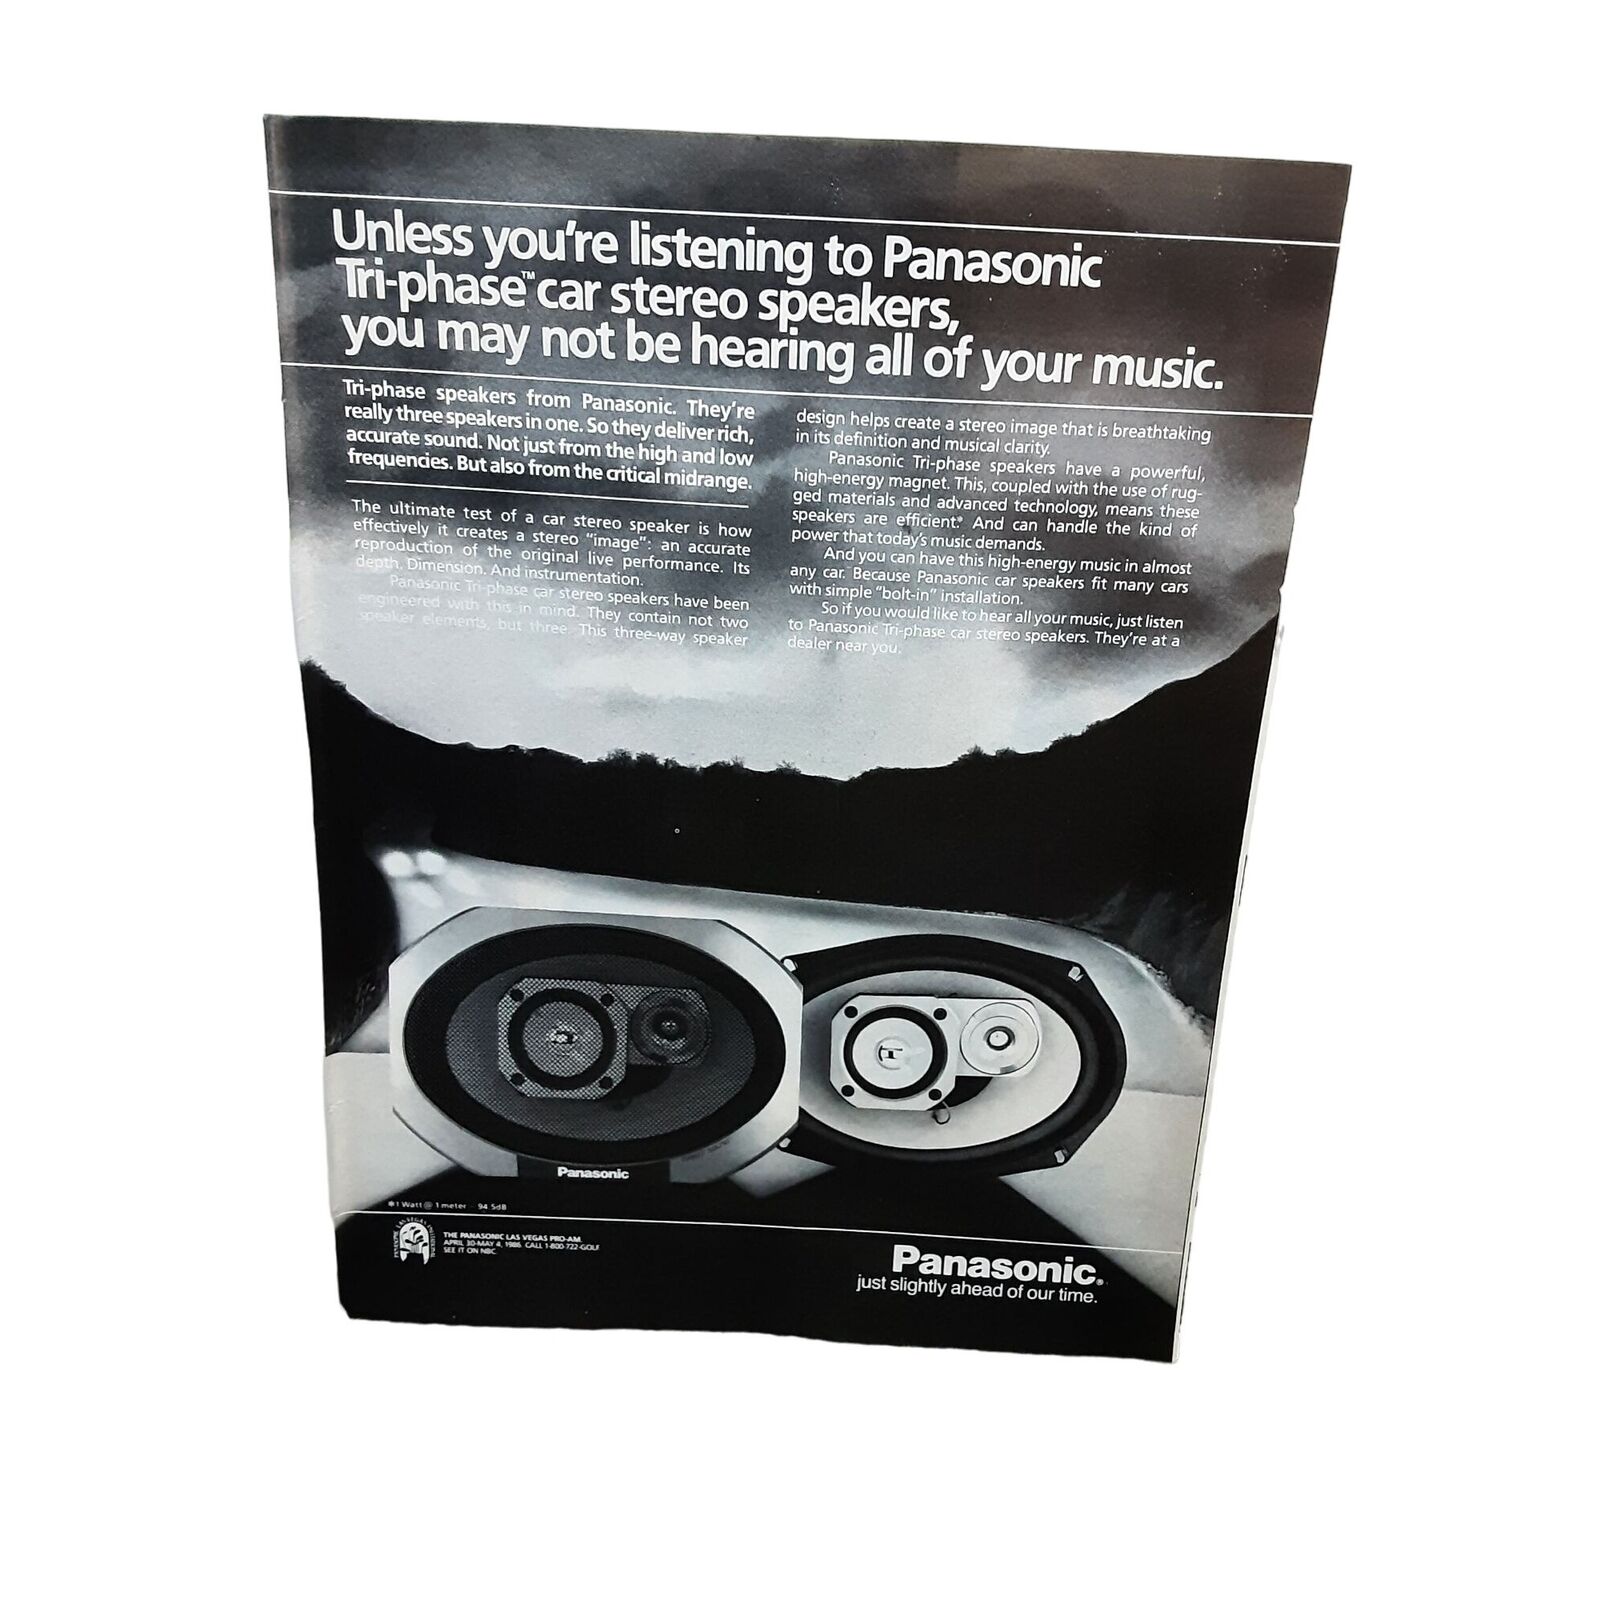 1985 Panasonic Car Stereo Speakers Original Print Ad vintage